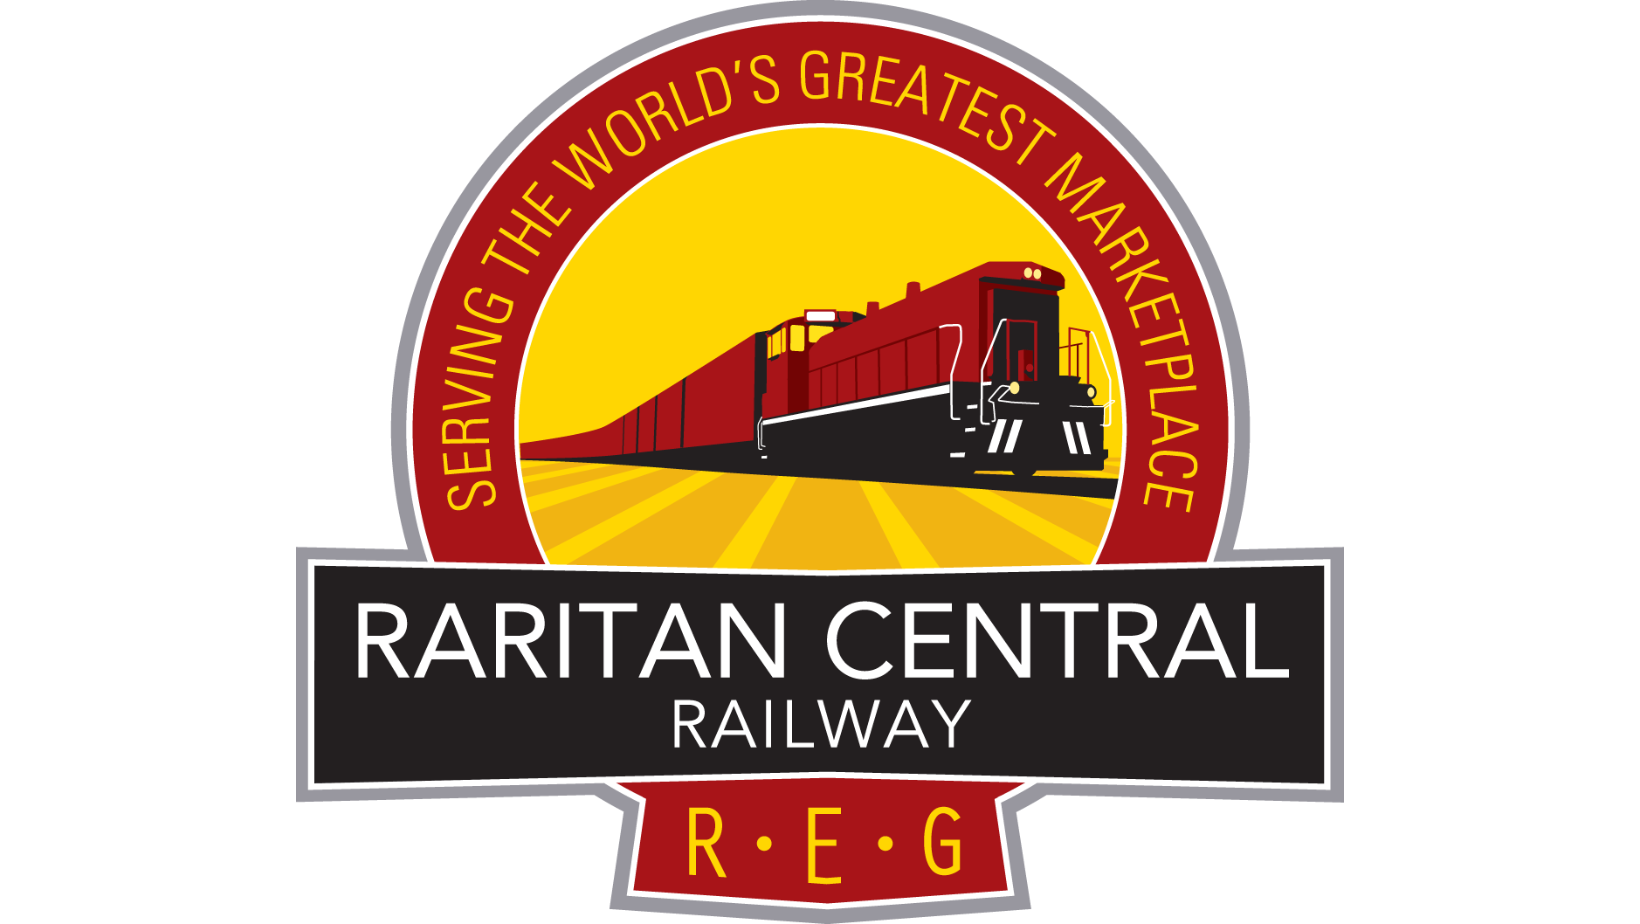 Raritan Central Railway